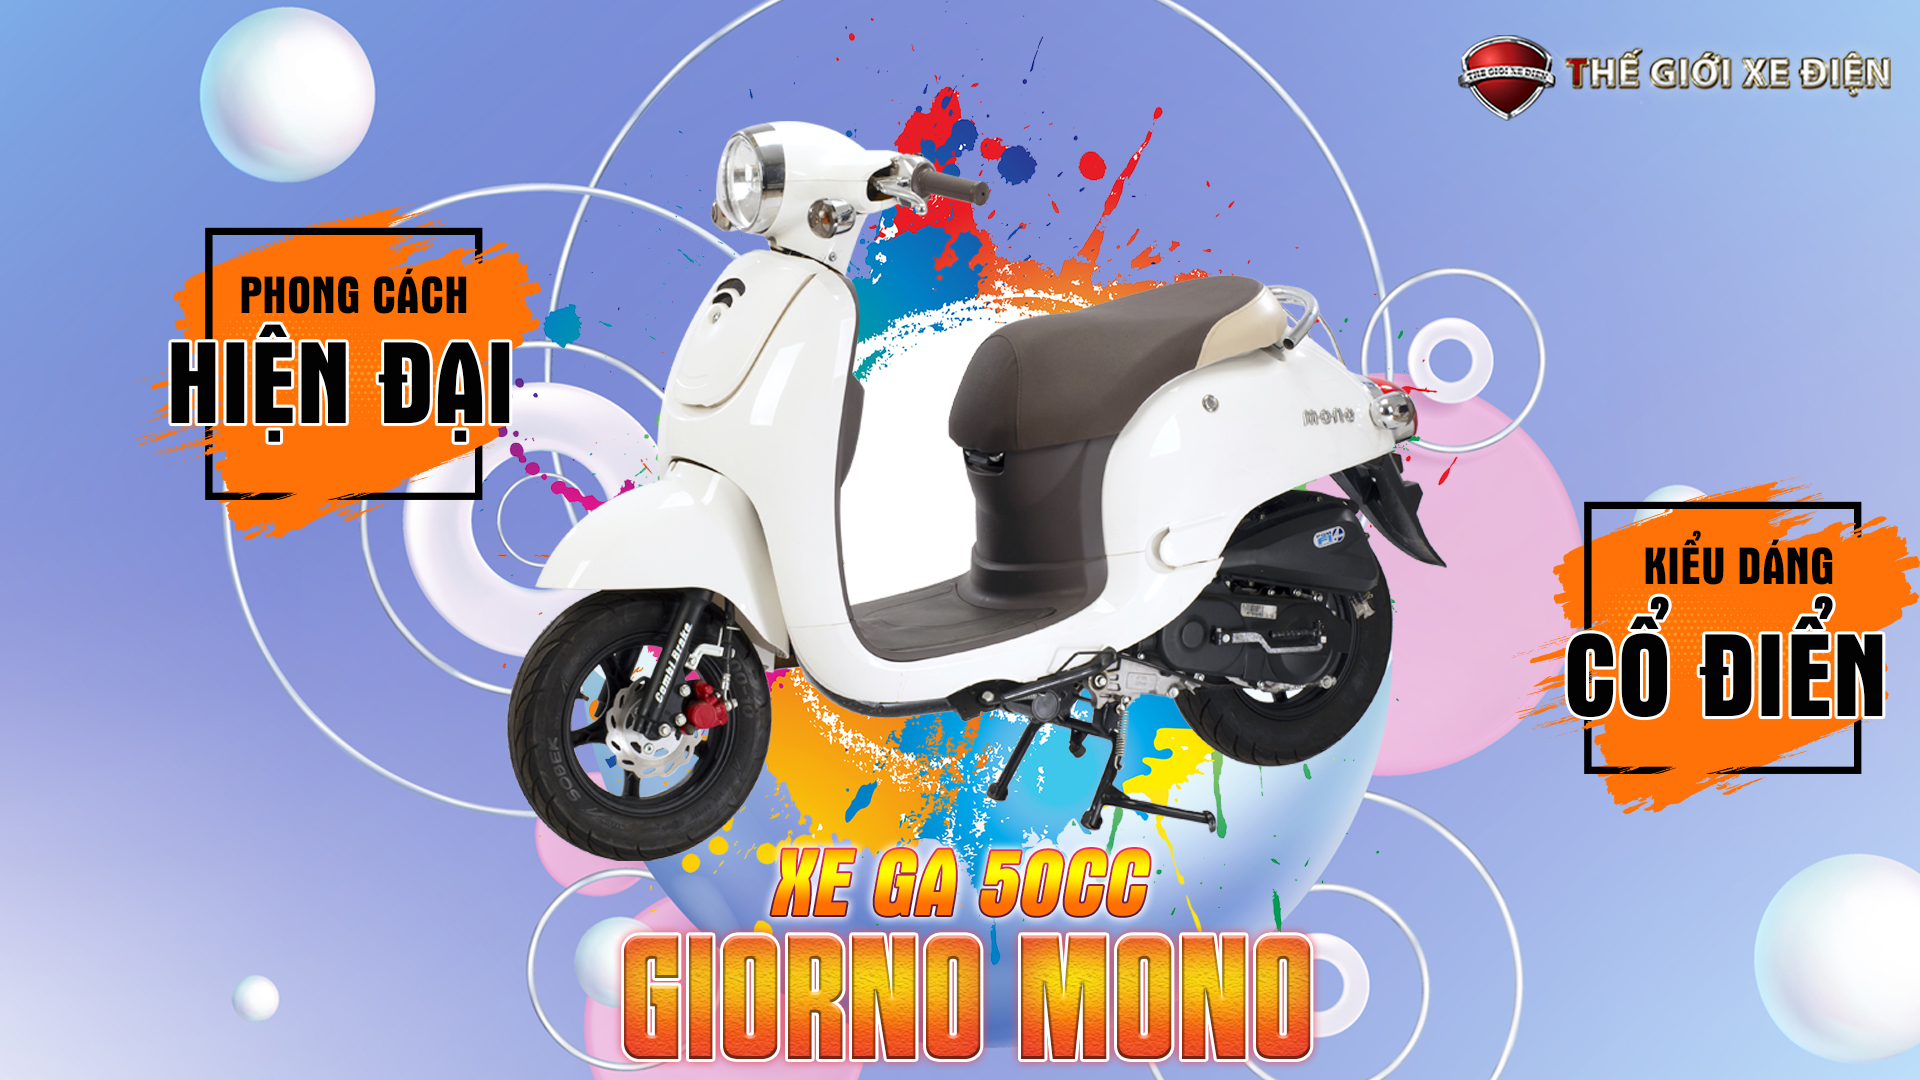 xe tay ga nhỏ gọn nhẹ 50cc Giorno Mono